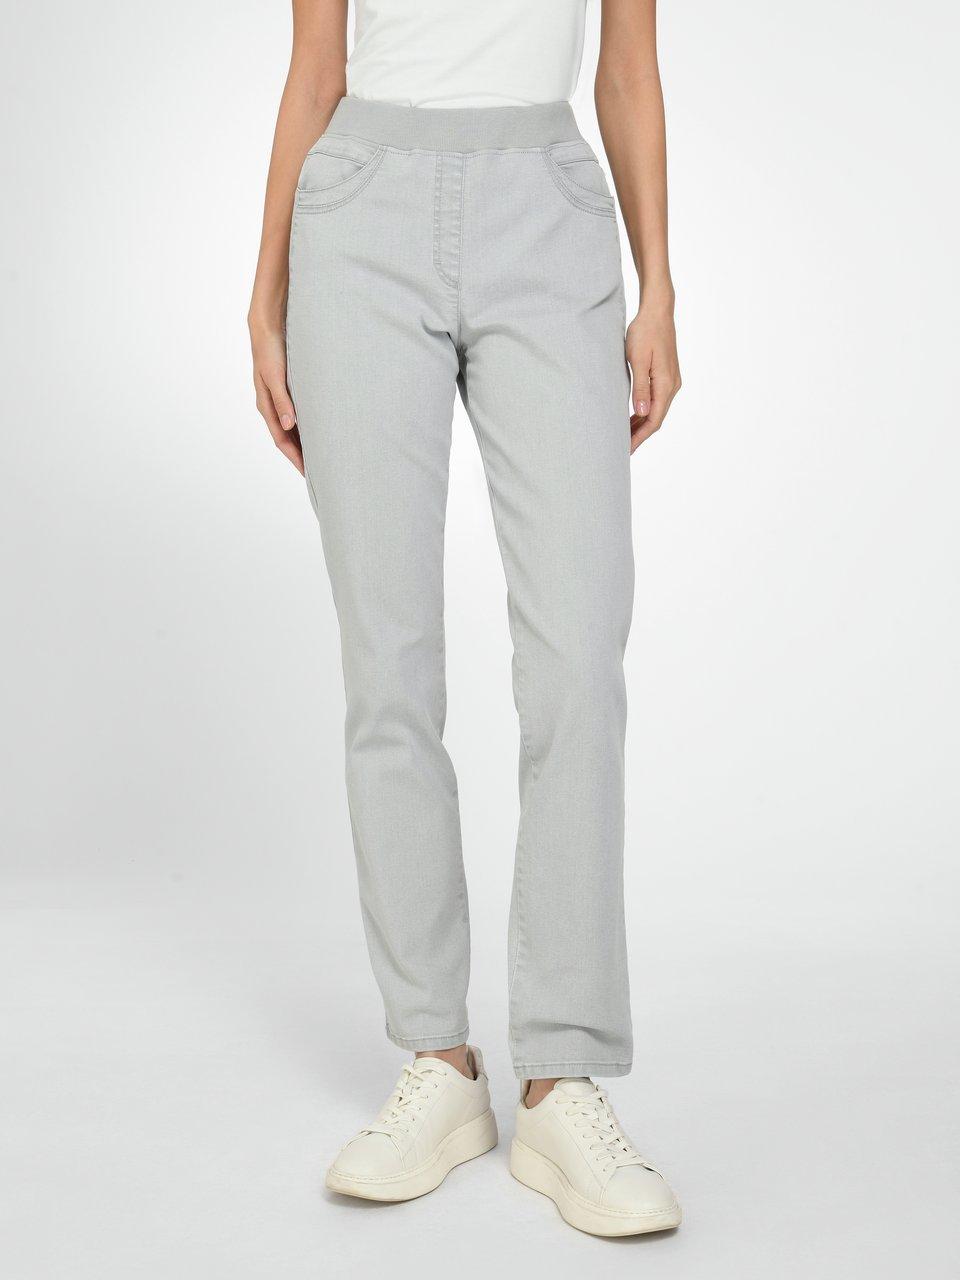 by Brax - ProForm slim-jeans model Pamina Fun Grey denim